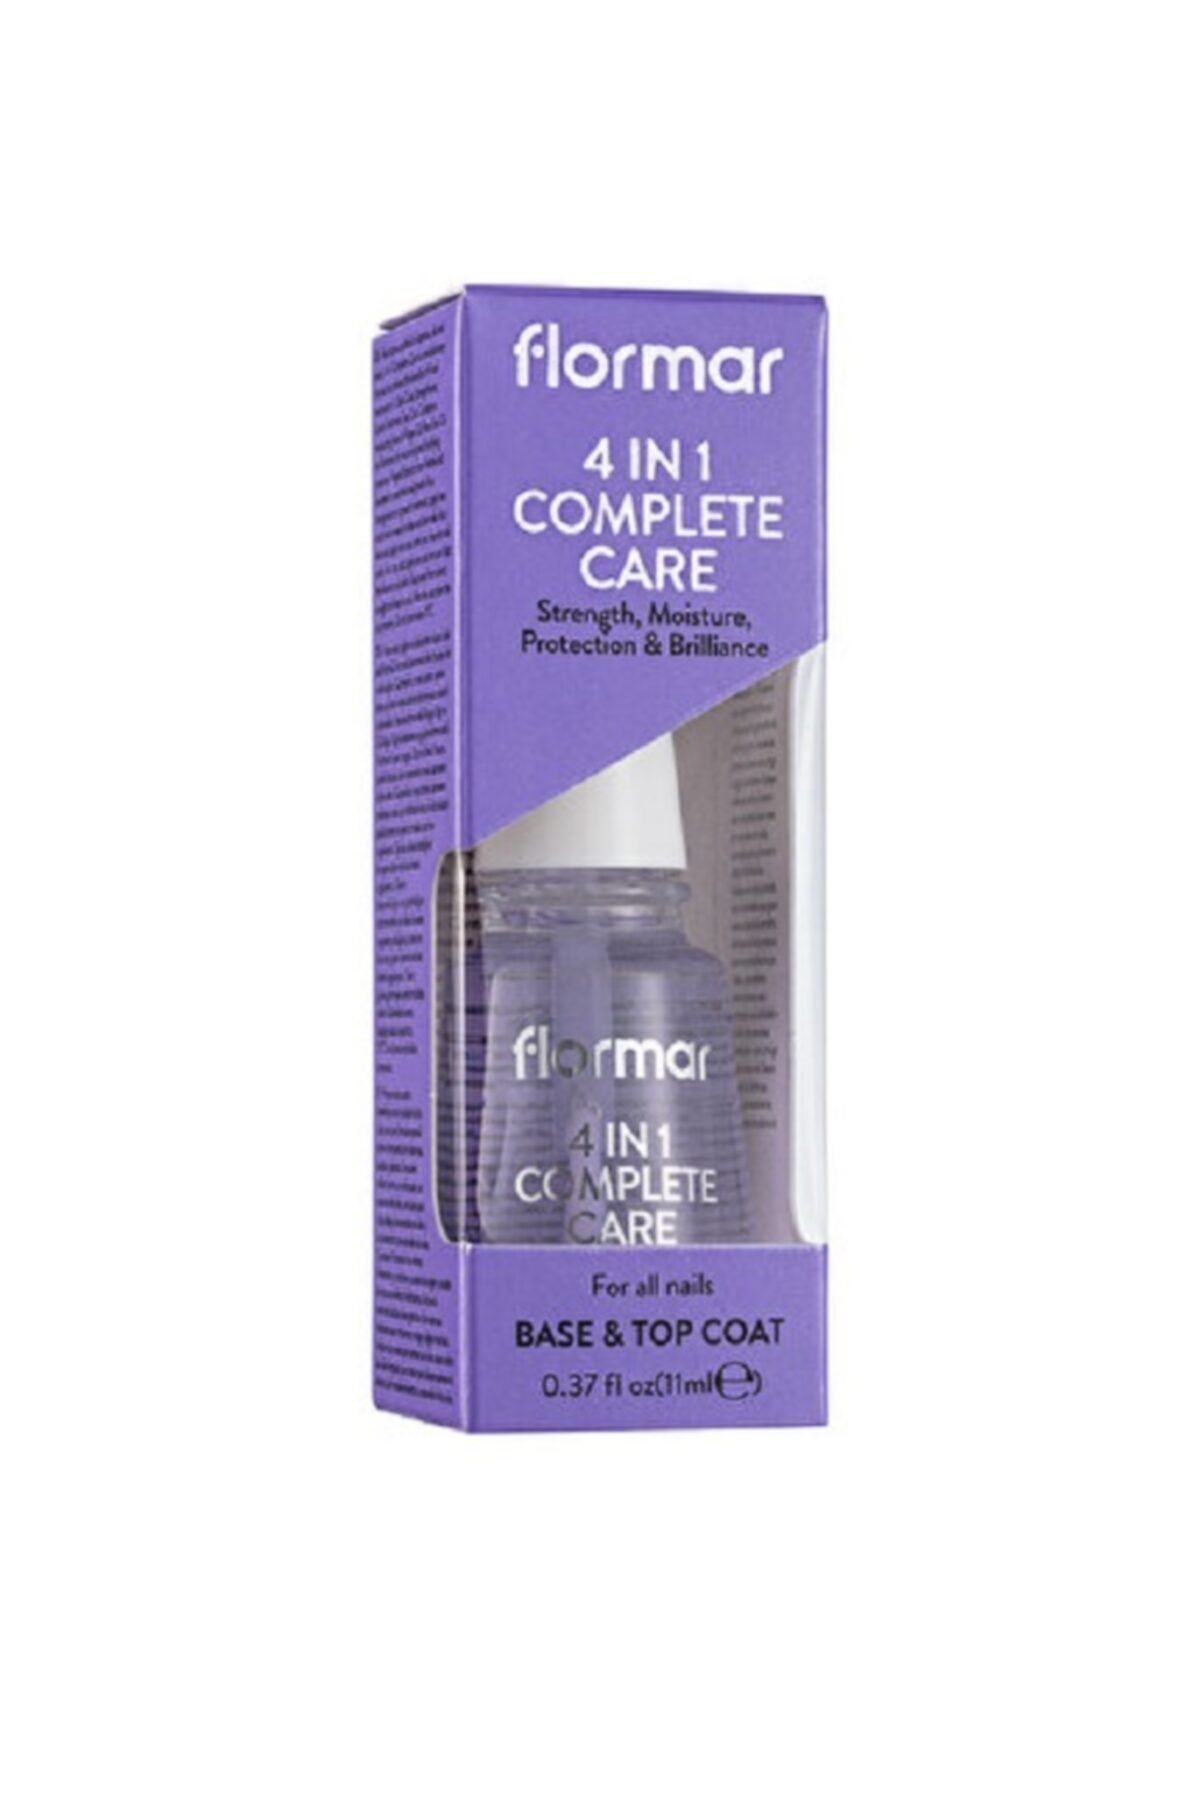 Flormar مجموعه کامل مراقبت از ناخن ۴ در ۱ با طراحی مجدد